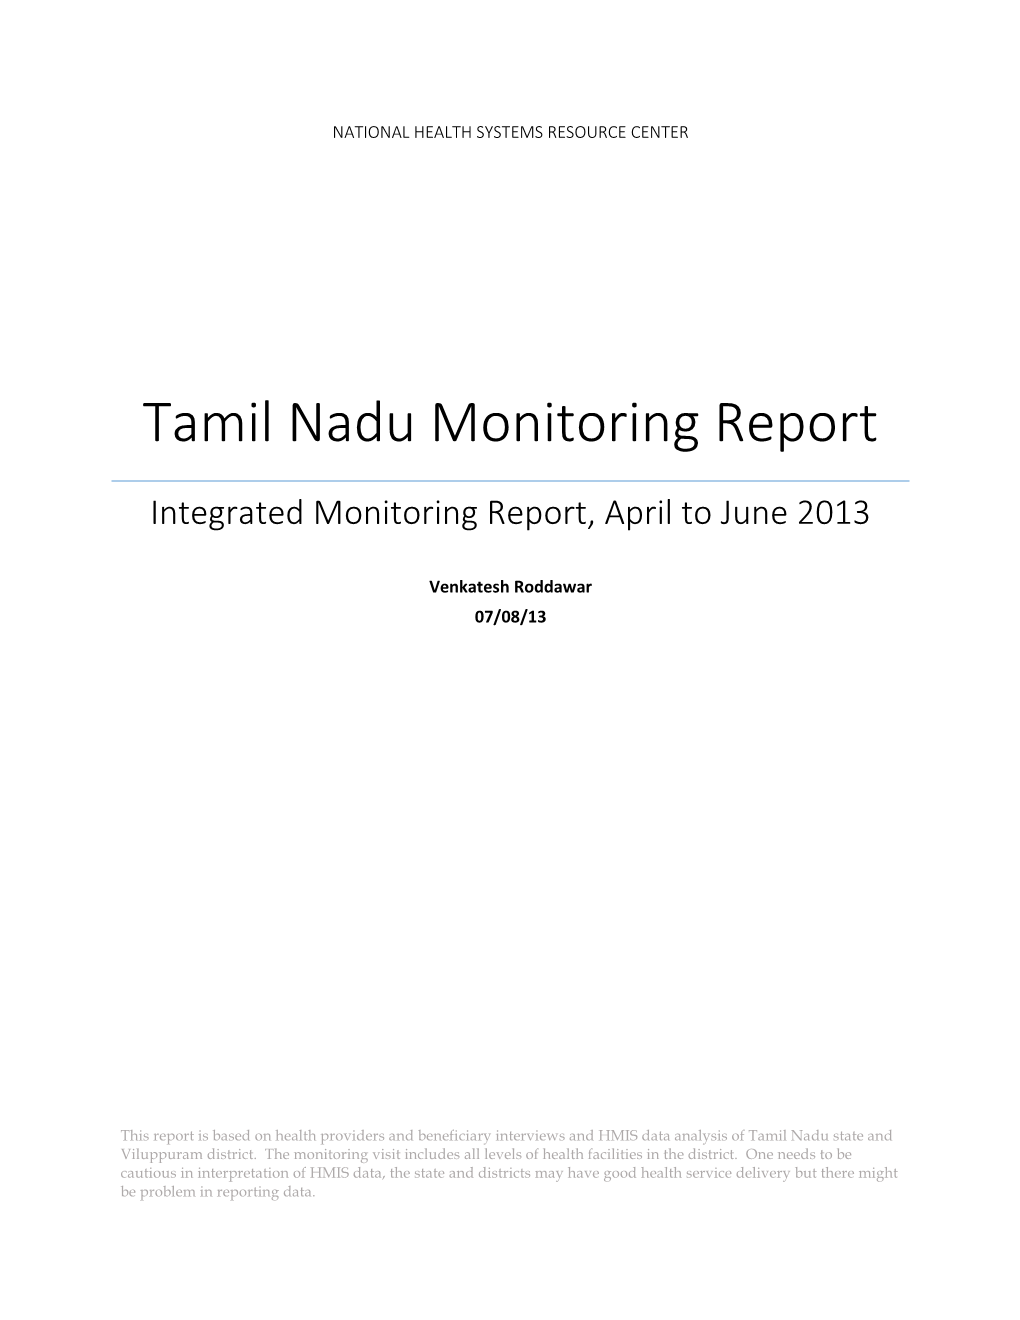 Tamil Nadu Monitoring Report